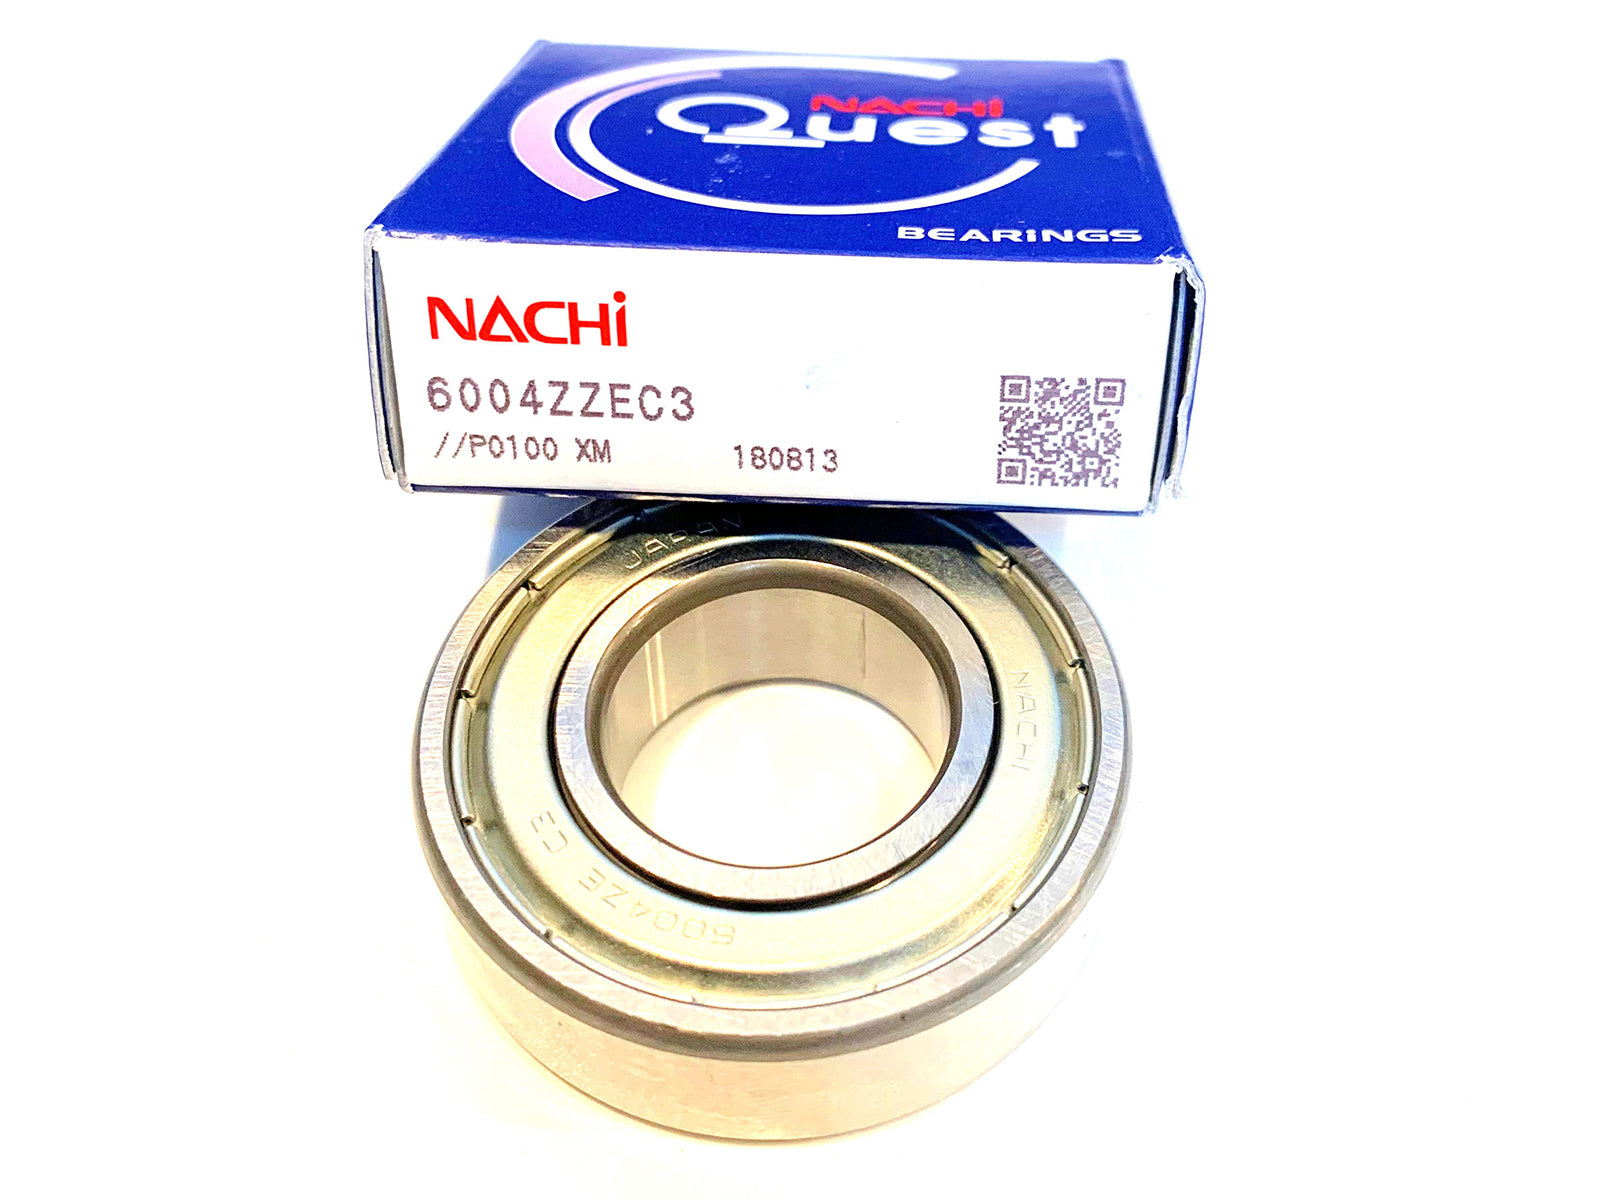 6004-ZZE C3 NACHI Ball Bearing - ppdistributors